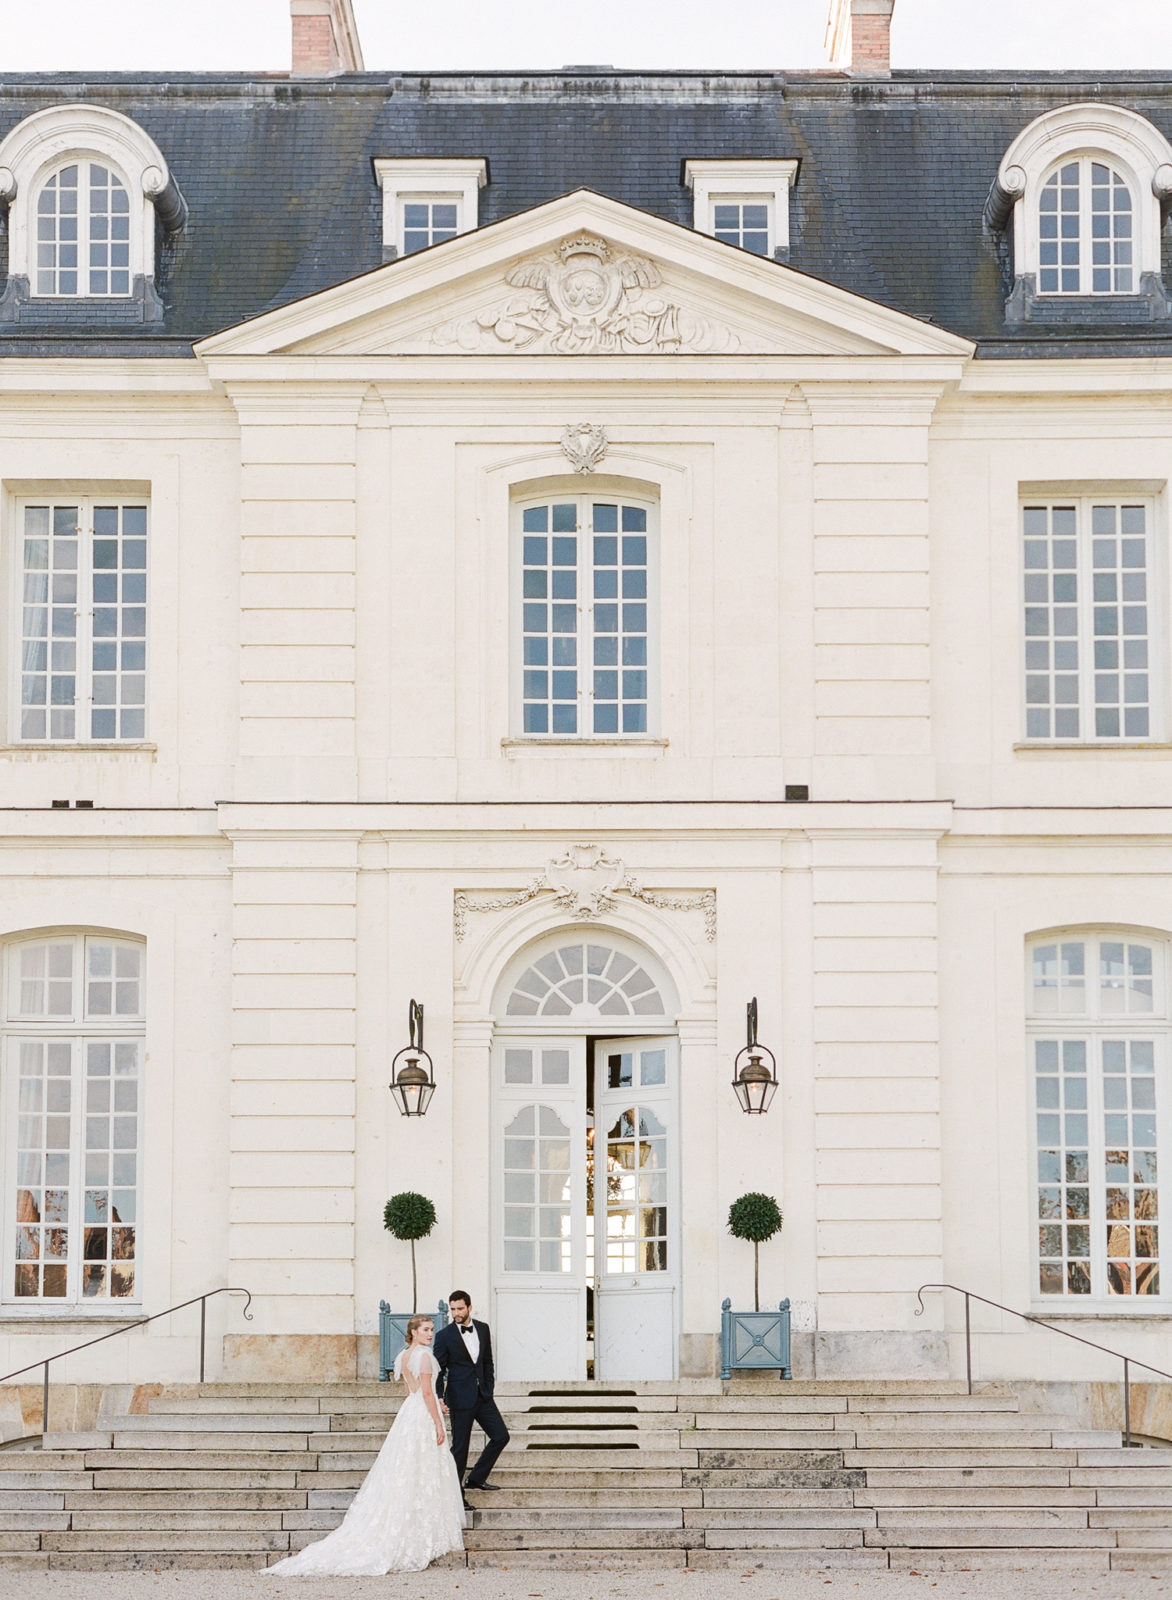 Best Destination Wedding Venues | Molly Carr Photography | Luxury Destination Wedding | Paris Film Photographer | France Wedding Photography | Chateau du Grand-Luce | Loire Valley, France